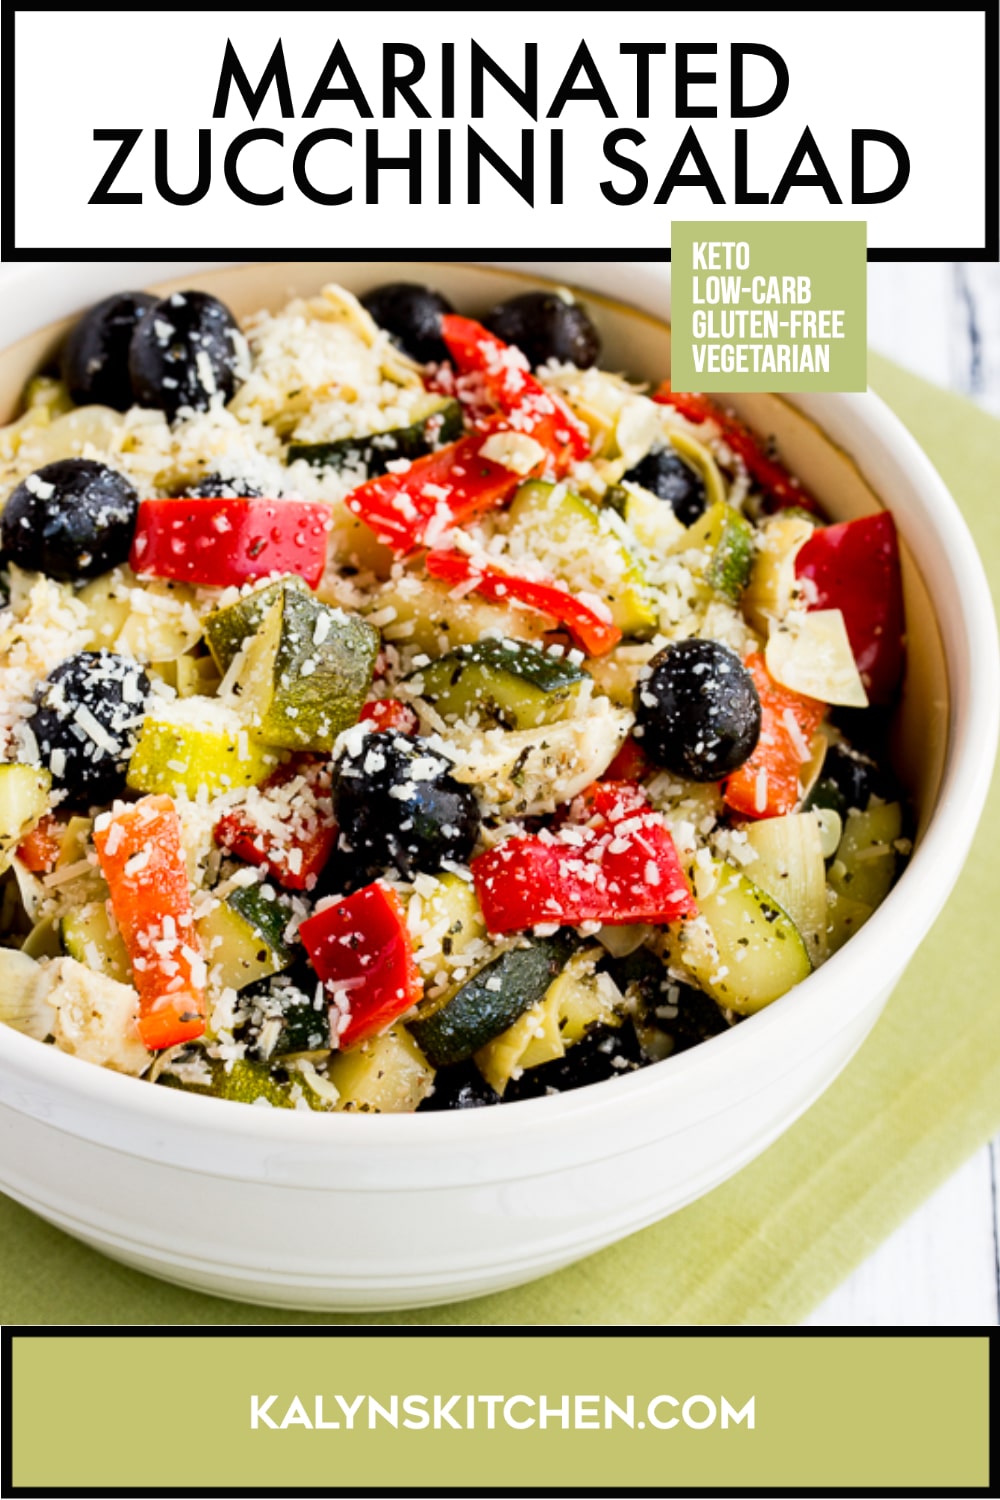 Pinterest image of Marinated Zucchini Salad